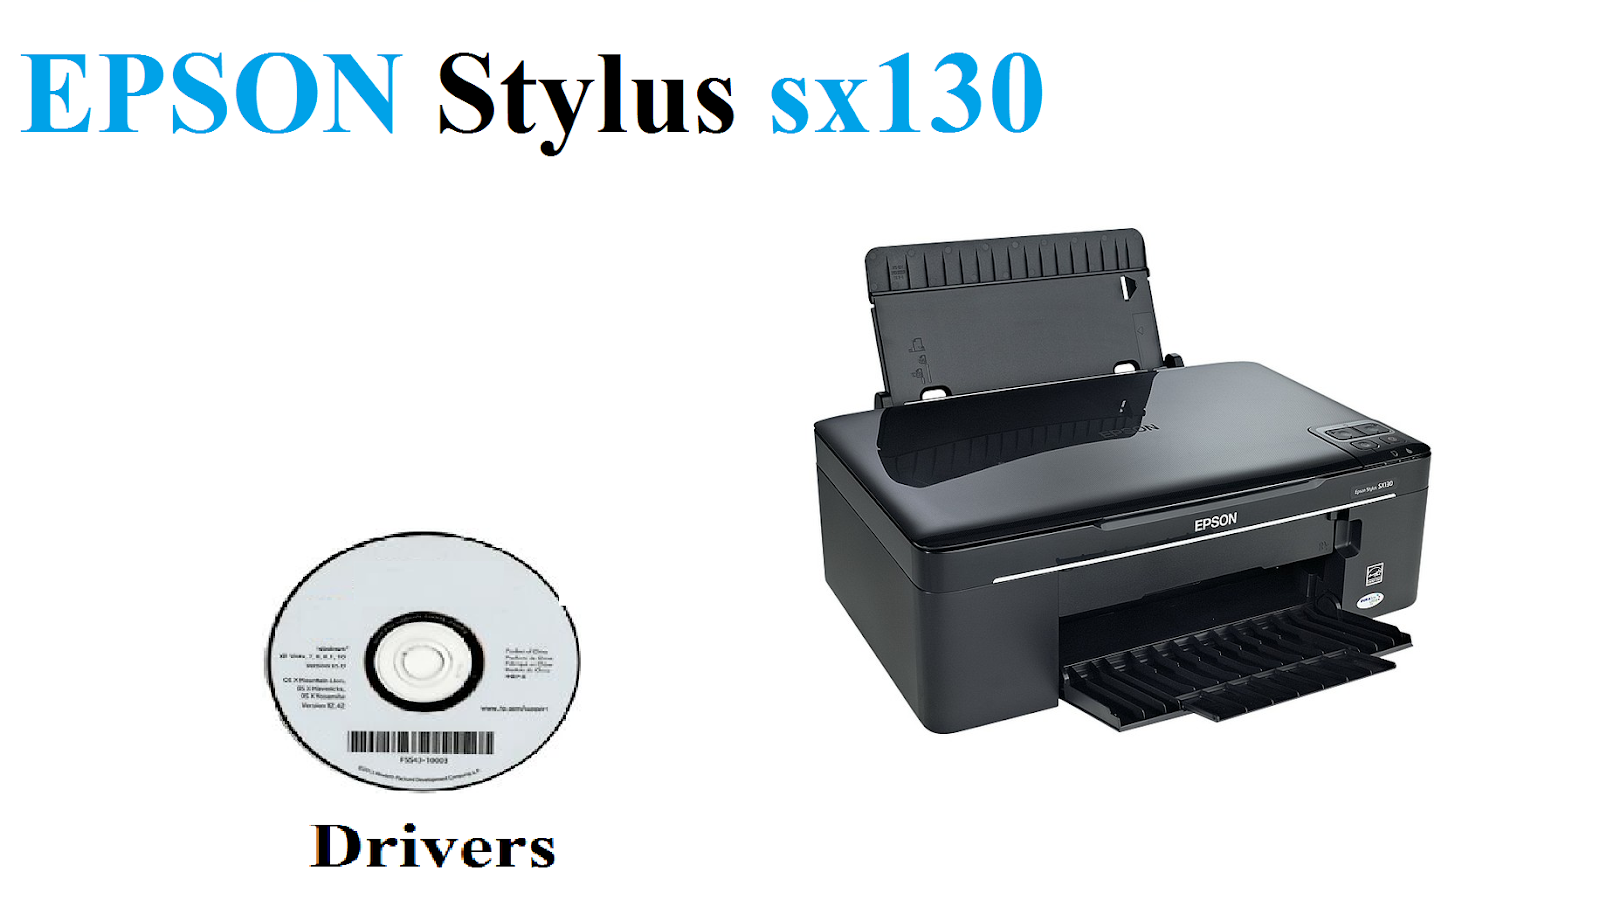  Stylus sx130  Printer